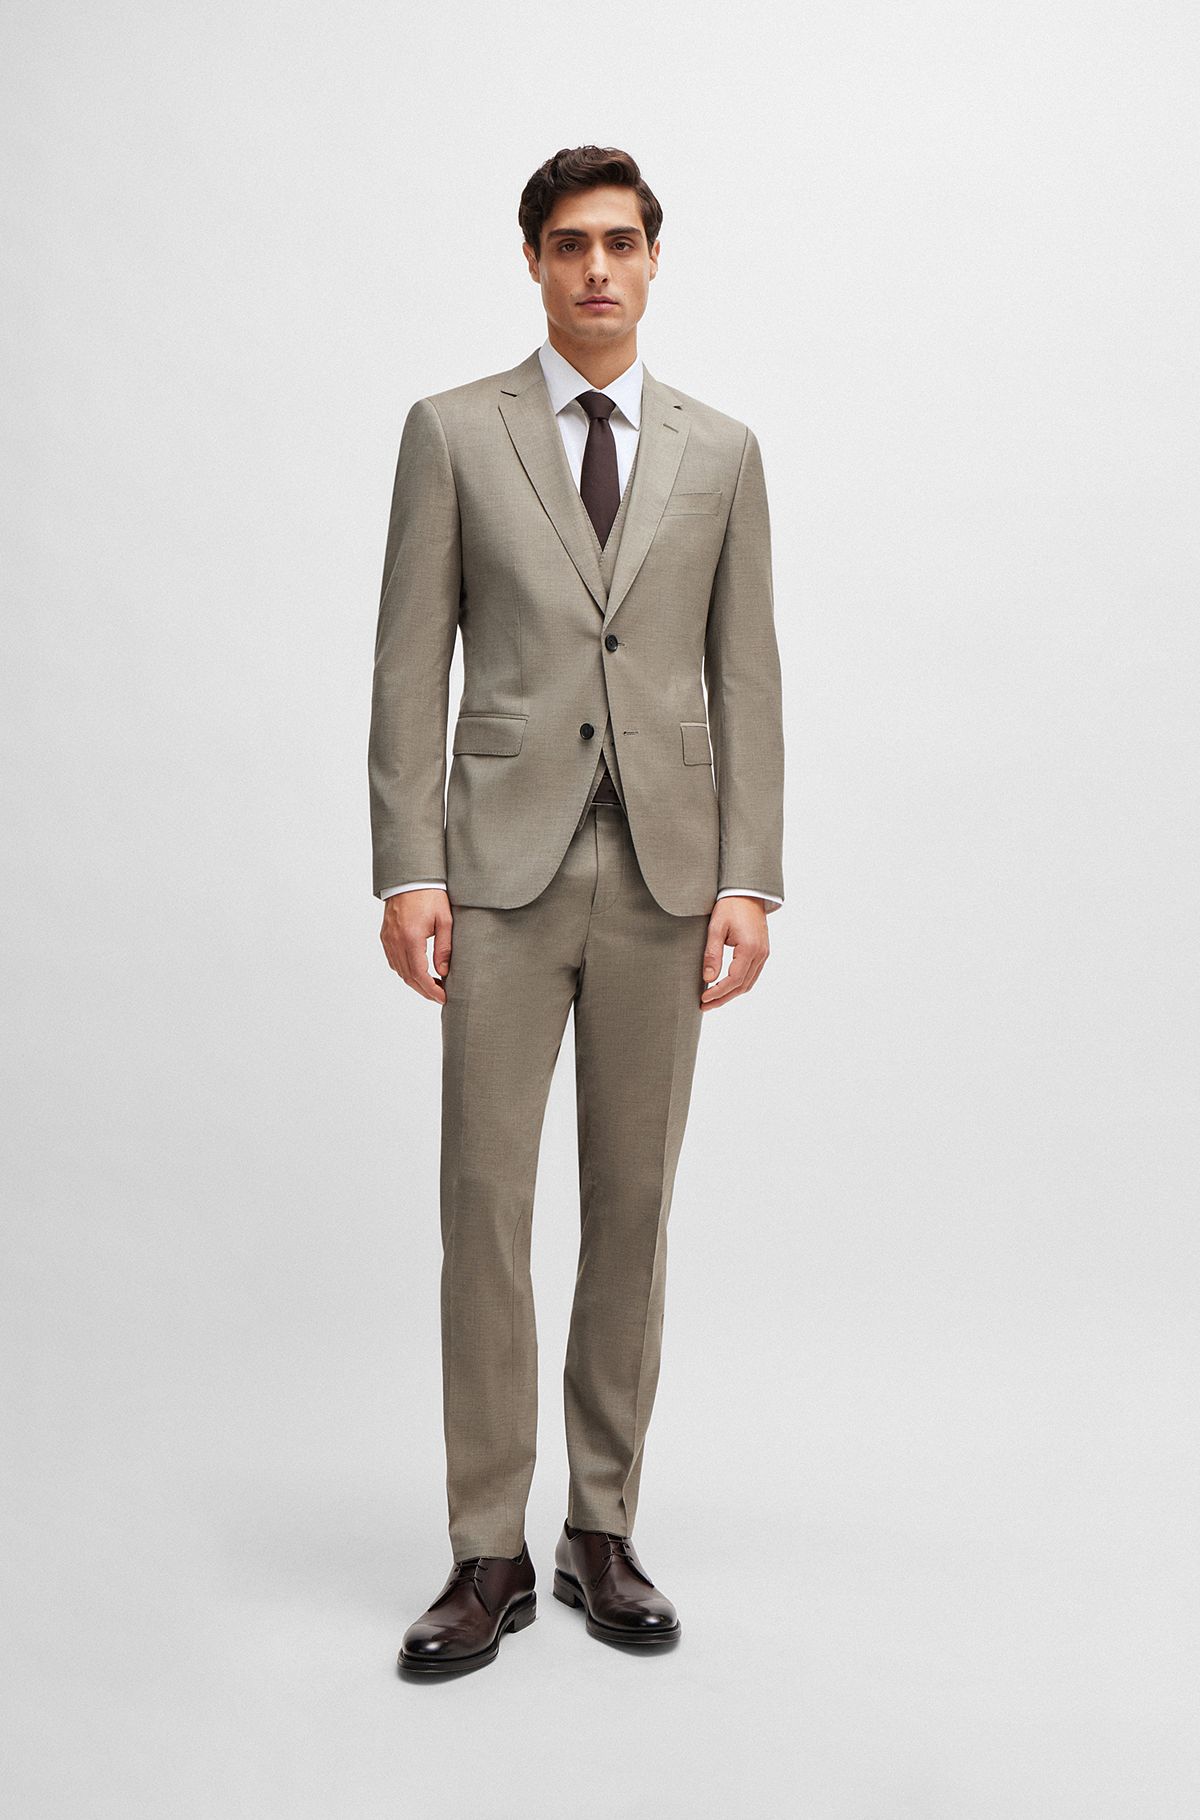 Dennis dress Suit for Mens 3-Piece Business Suit Set Formal Jacket